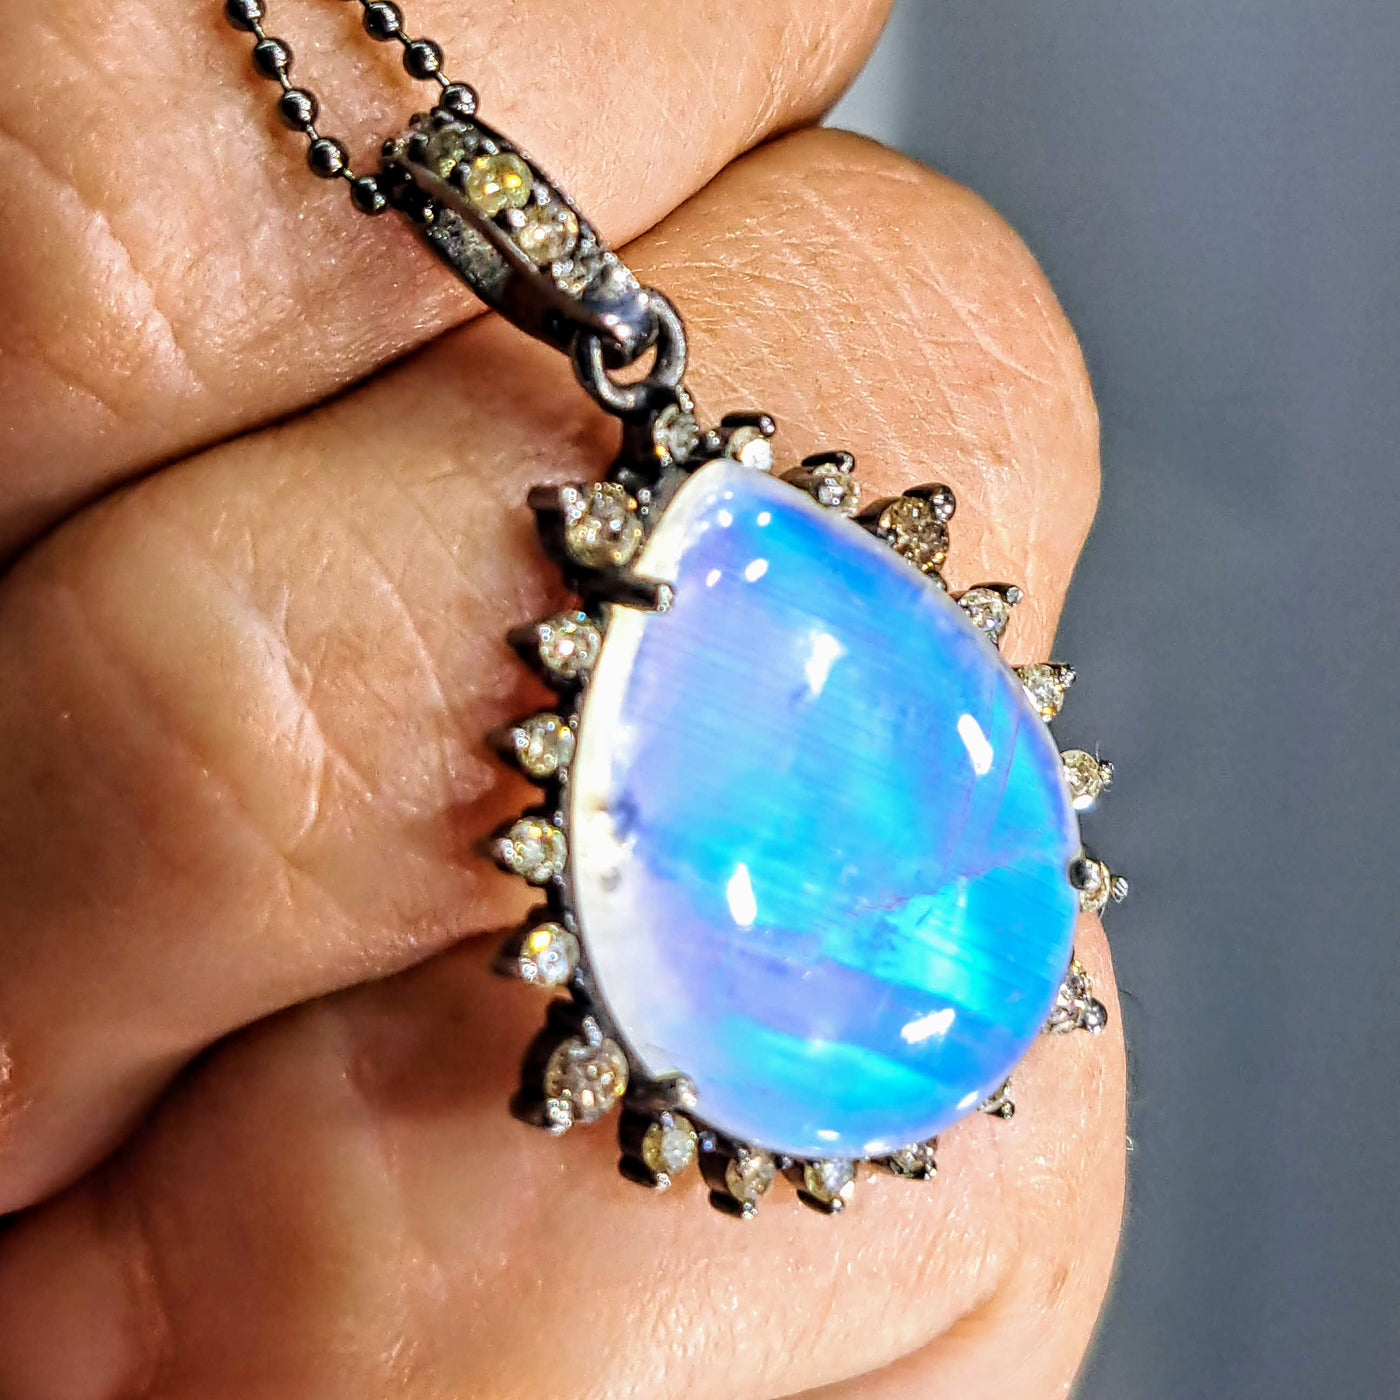 "The Mystic" Pendant Necklace - Diamonds, Moonstone, Black Sterling